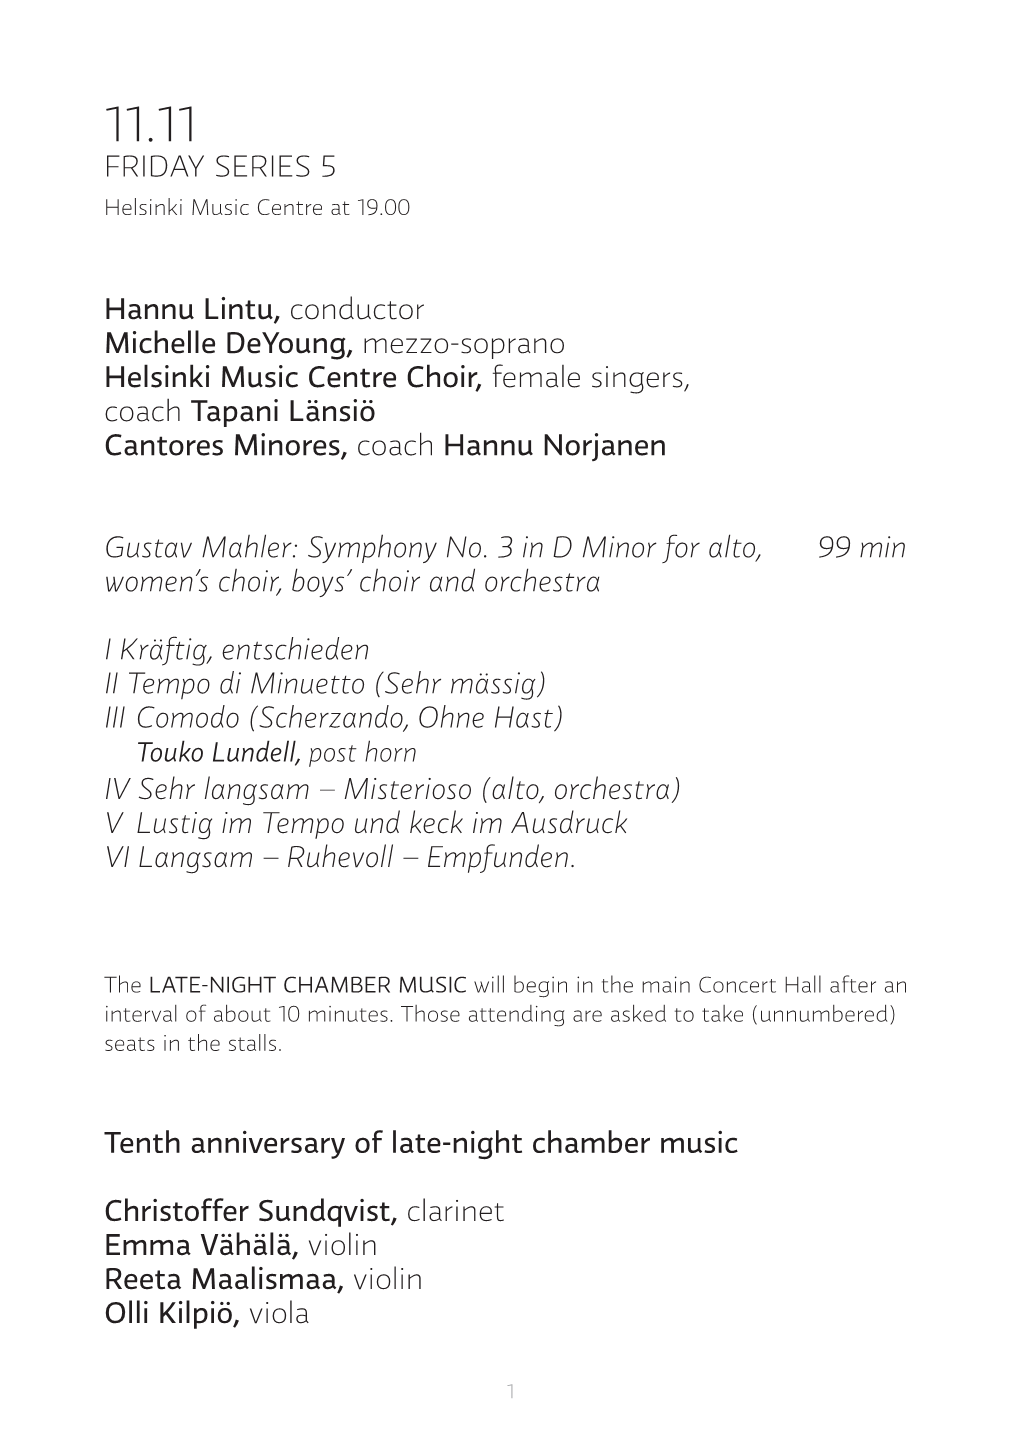 FRIDAY SERIES 5 Hannu Lintu, Conductor Michelle Deyoung, Mezzo-Soprano Helsinki Music Centre Choir, Female Singers, Coach Tapan